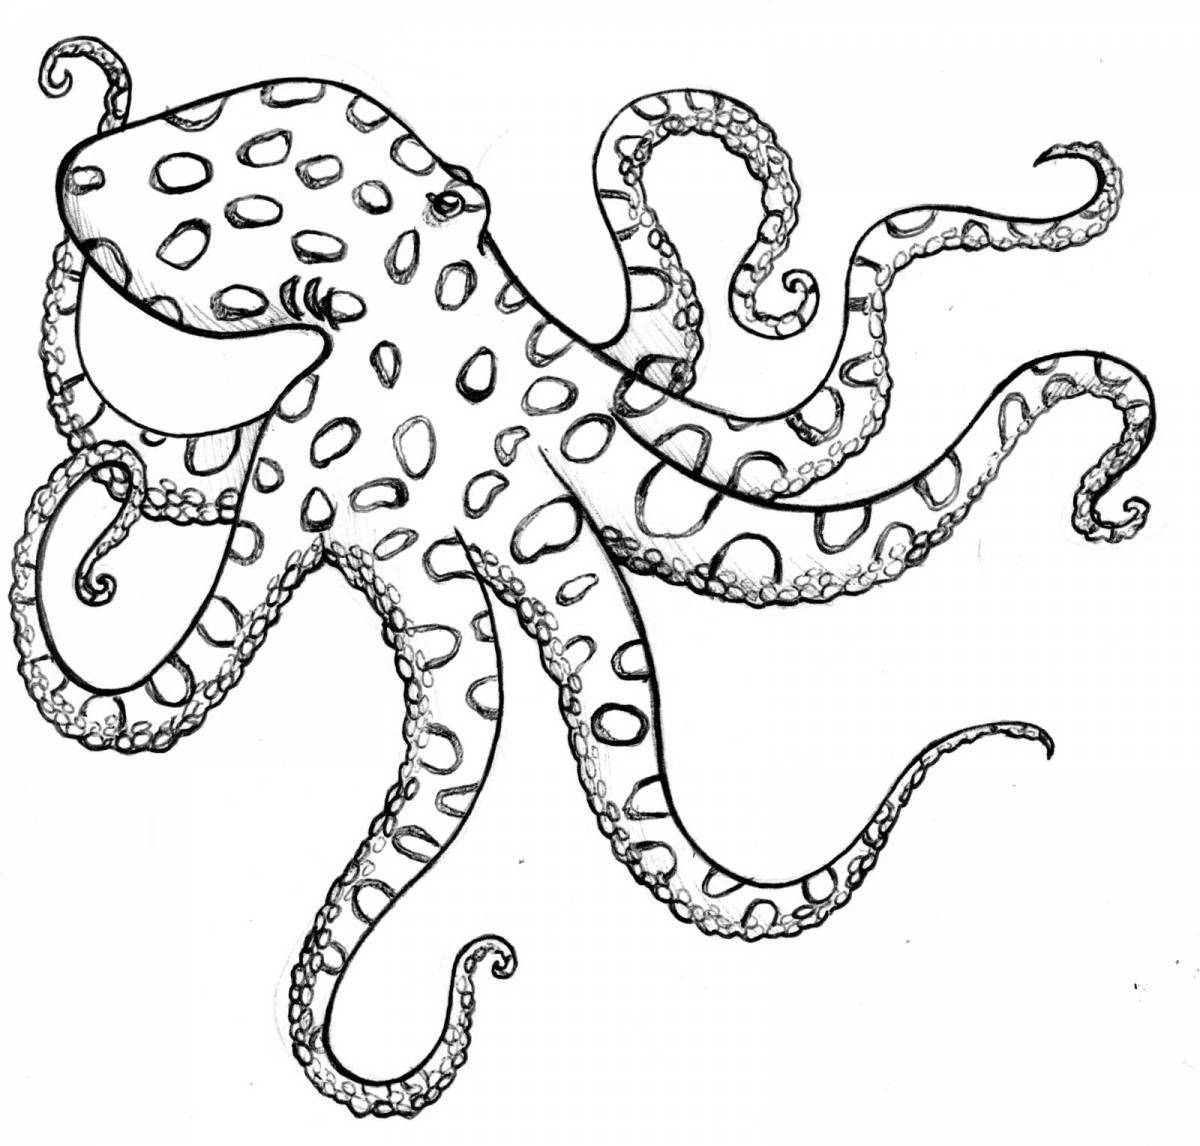 Coloring page happy octopus